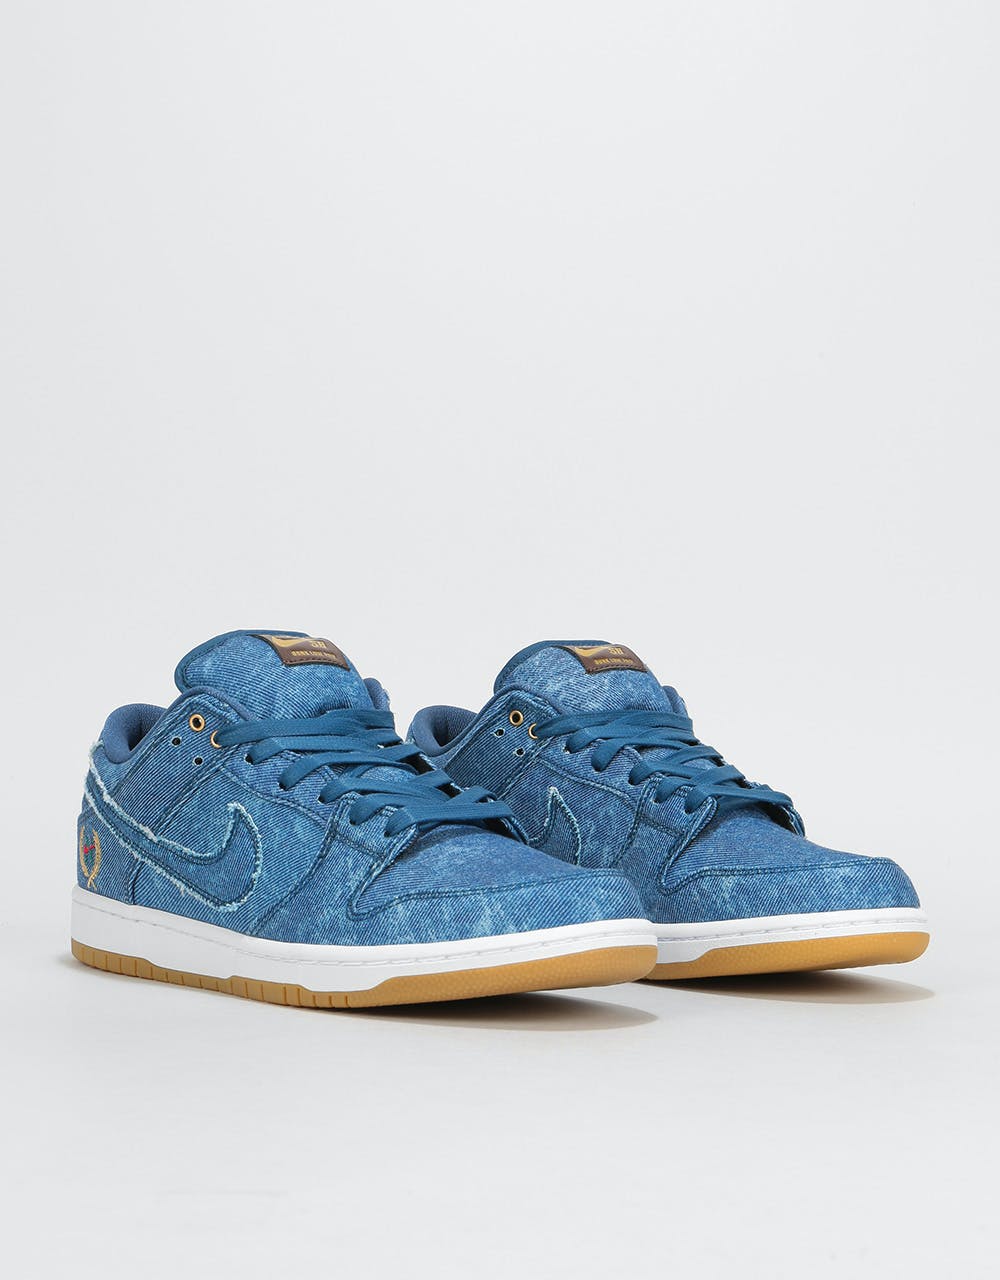 Nike SB Dunk Low Skate Shoes - Hydrogen Blue/Hydrogen Blue-White